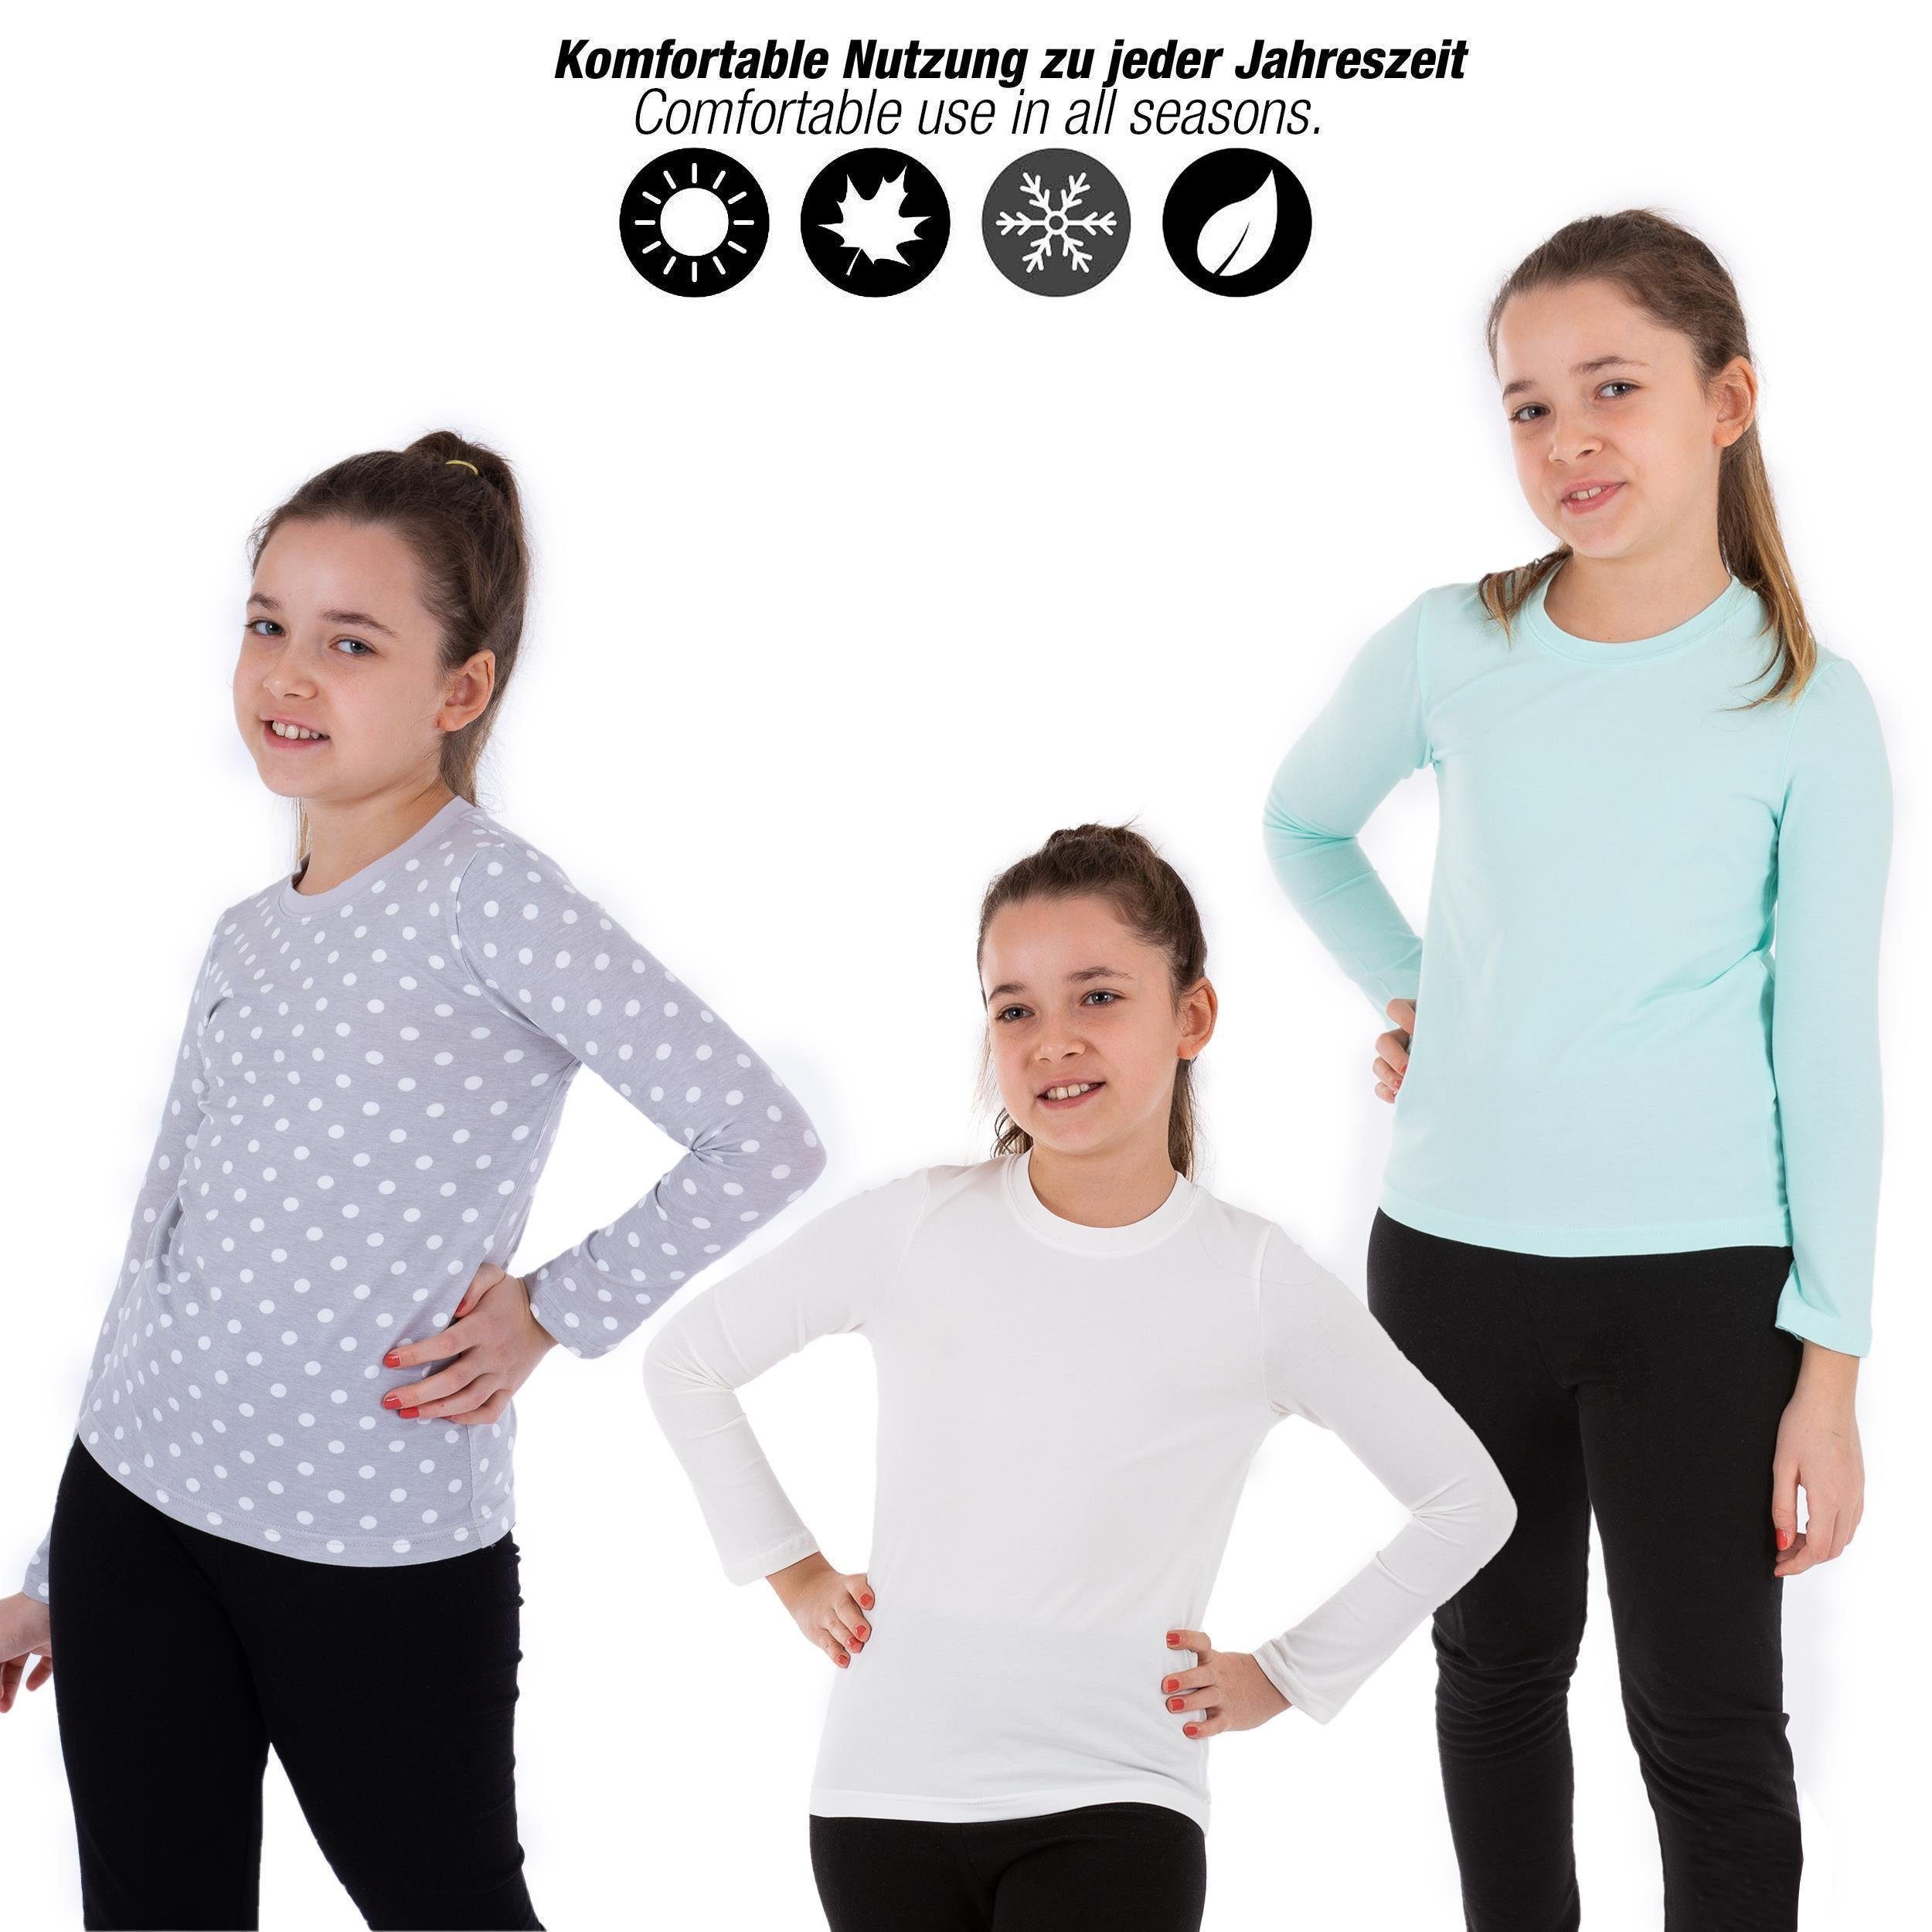 LOREZA Unterhemd 2 Pack Shirt Unterhemden (Set, 3er Body Langarmshirts Variante Mädchen Kinder 3-St)